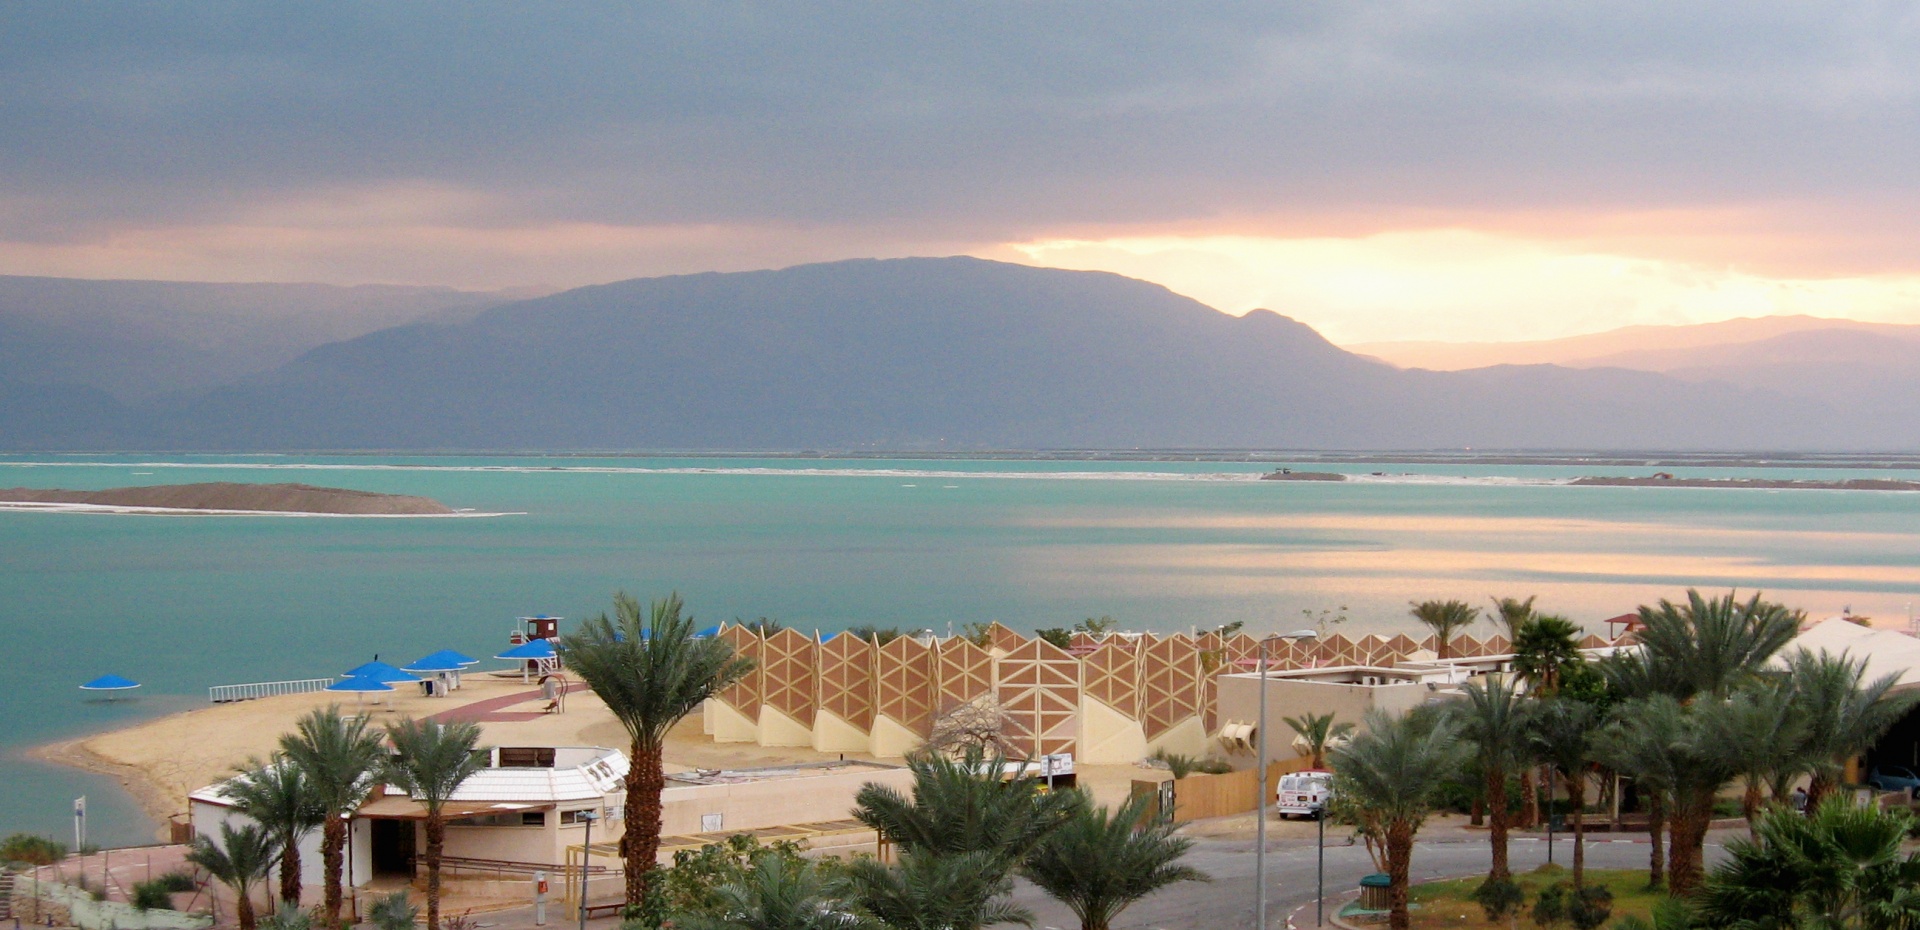 Sunrise Over Dead Sea